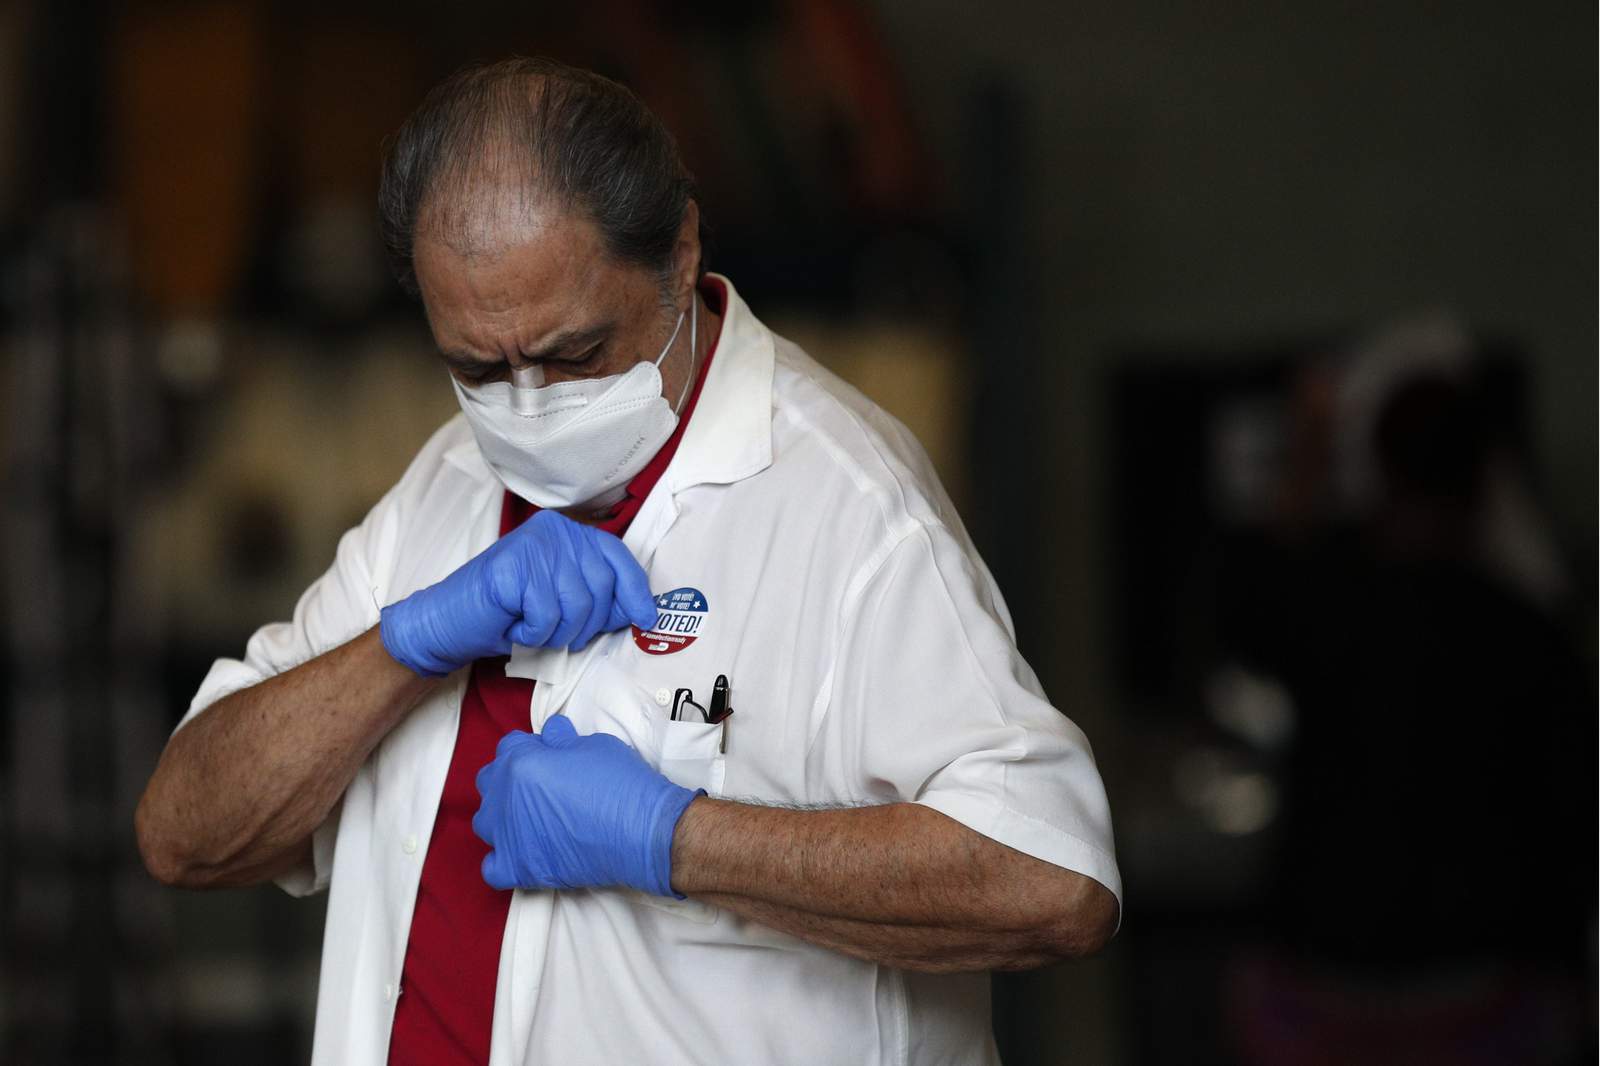 Virus hospitalizations surge as pandemic shadows US election